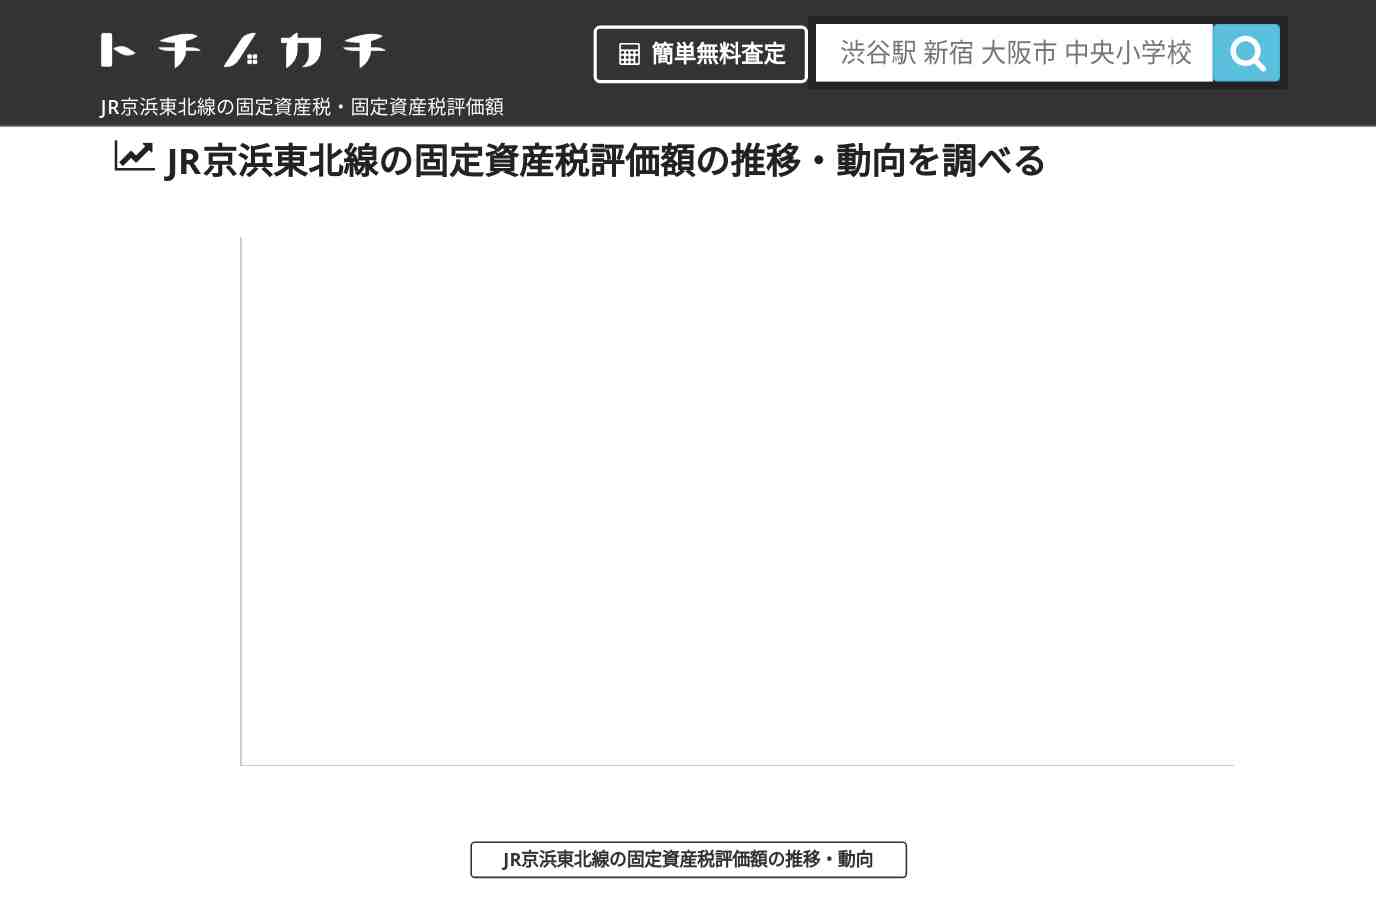 JR京浜東北線(JR)の固定資産税・固定資産税評価額 | トチノカチ